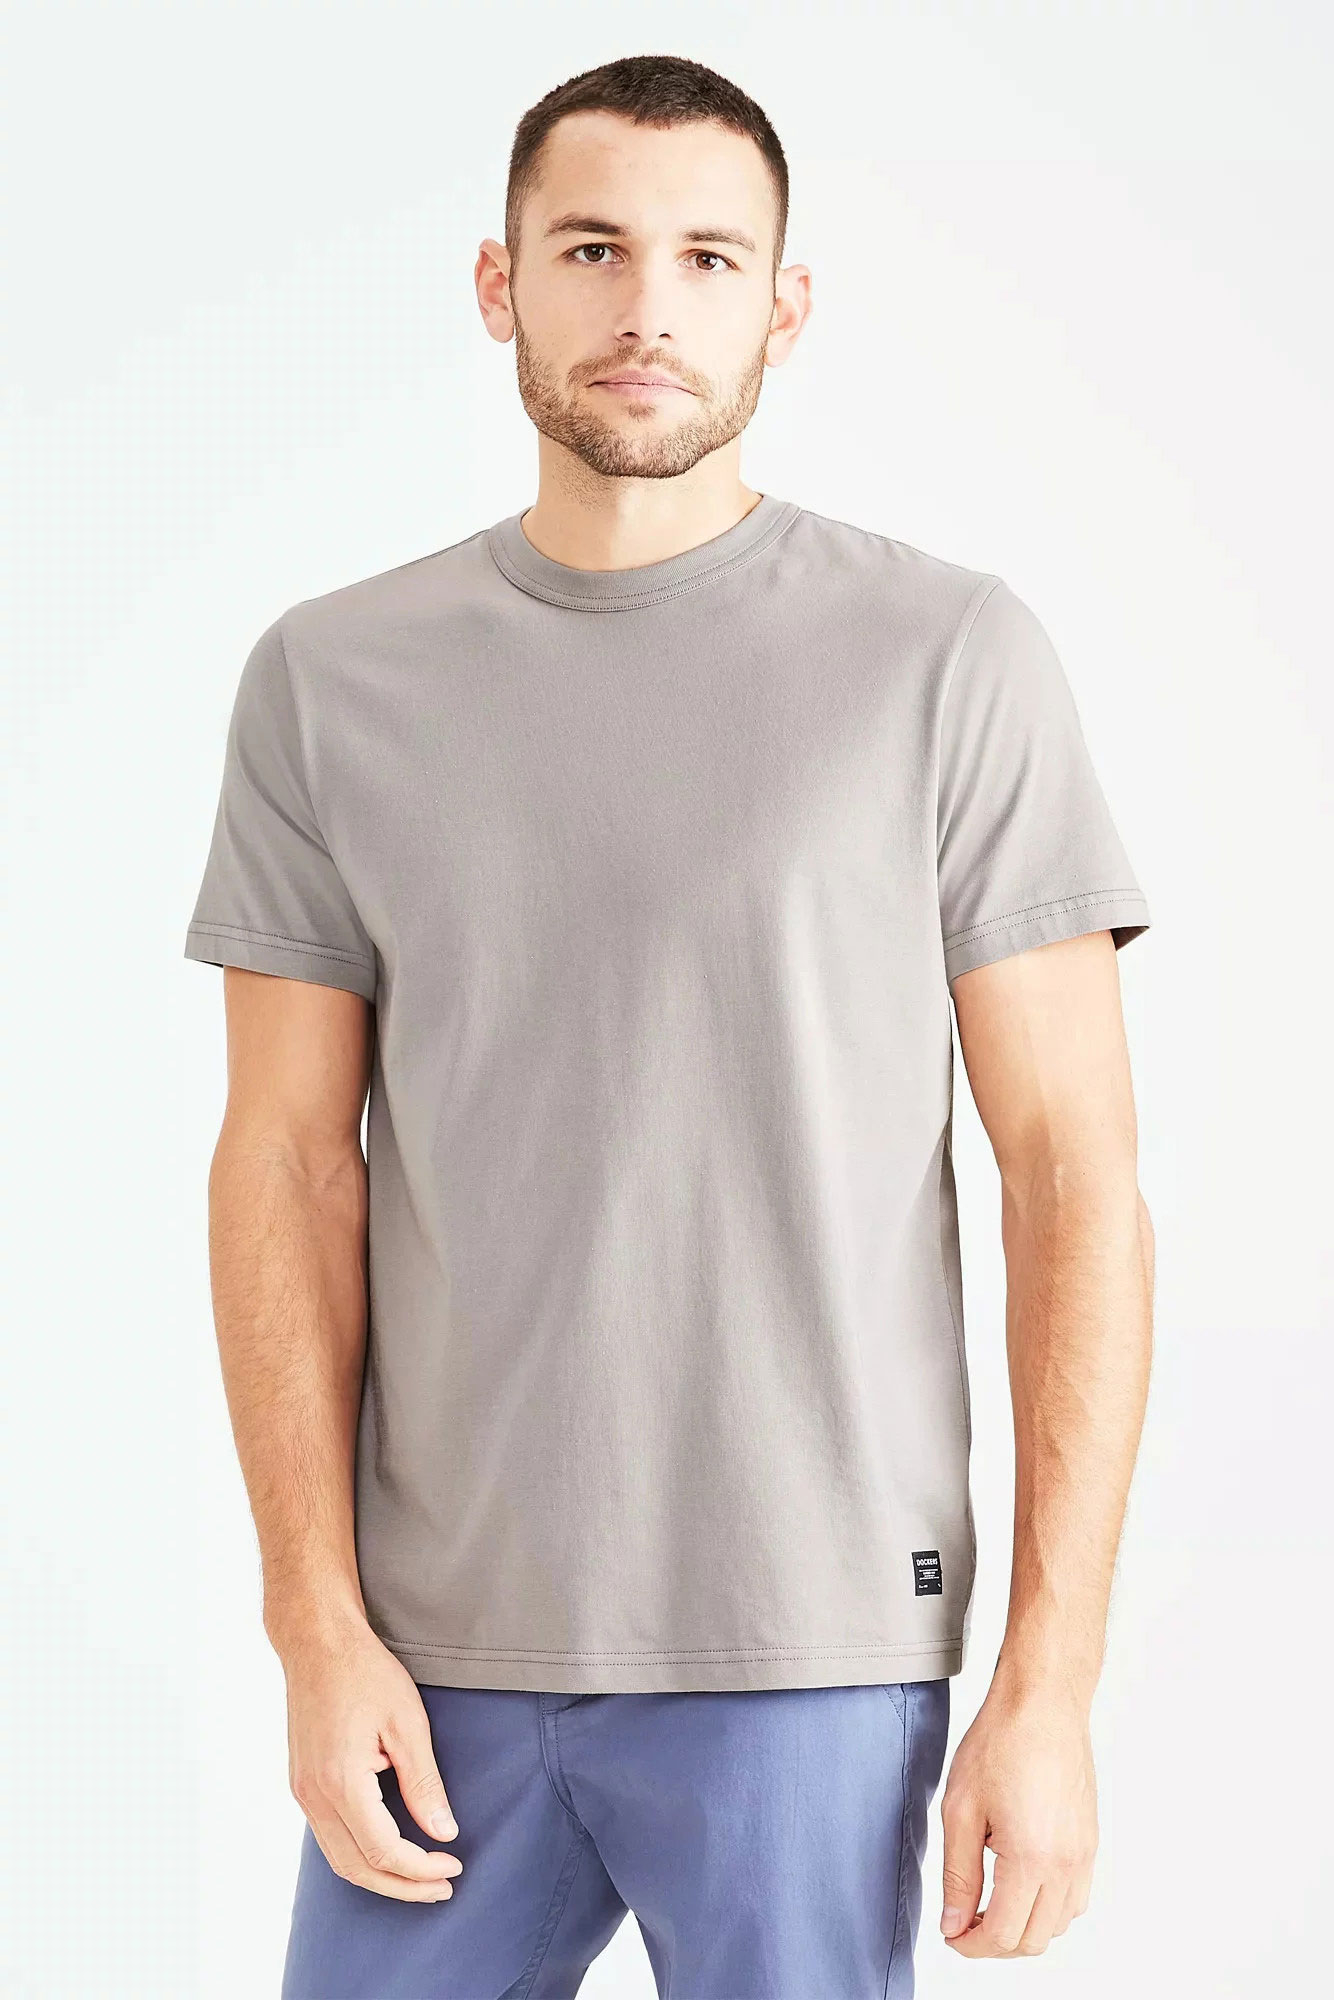 Dockers camiseta de hombre de m/c A0856-0027 gris